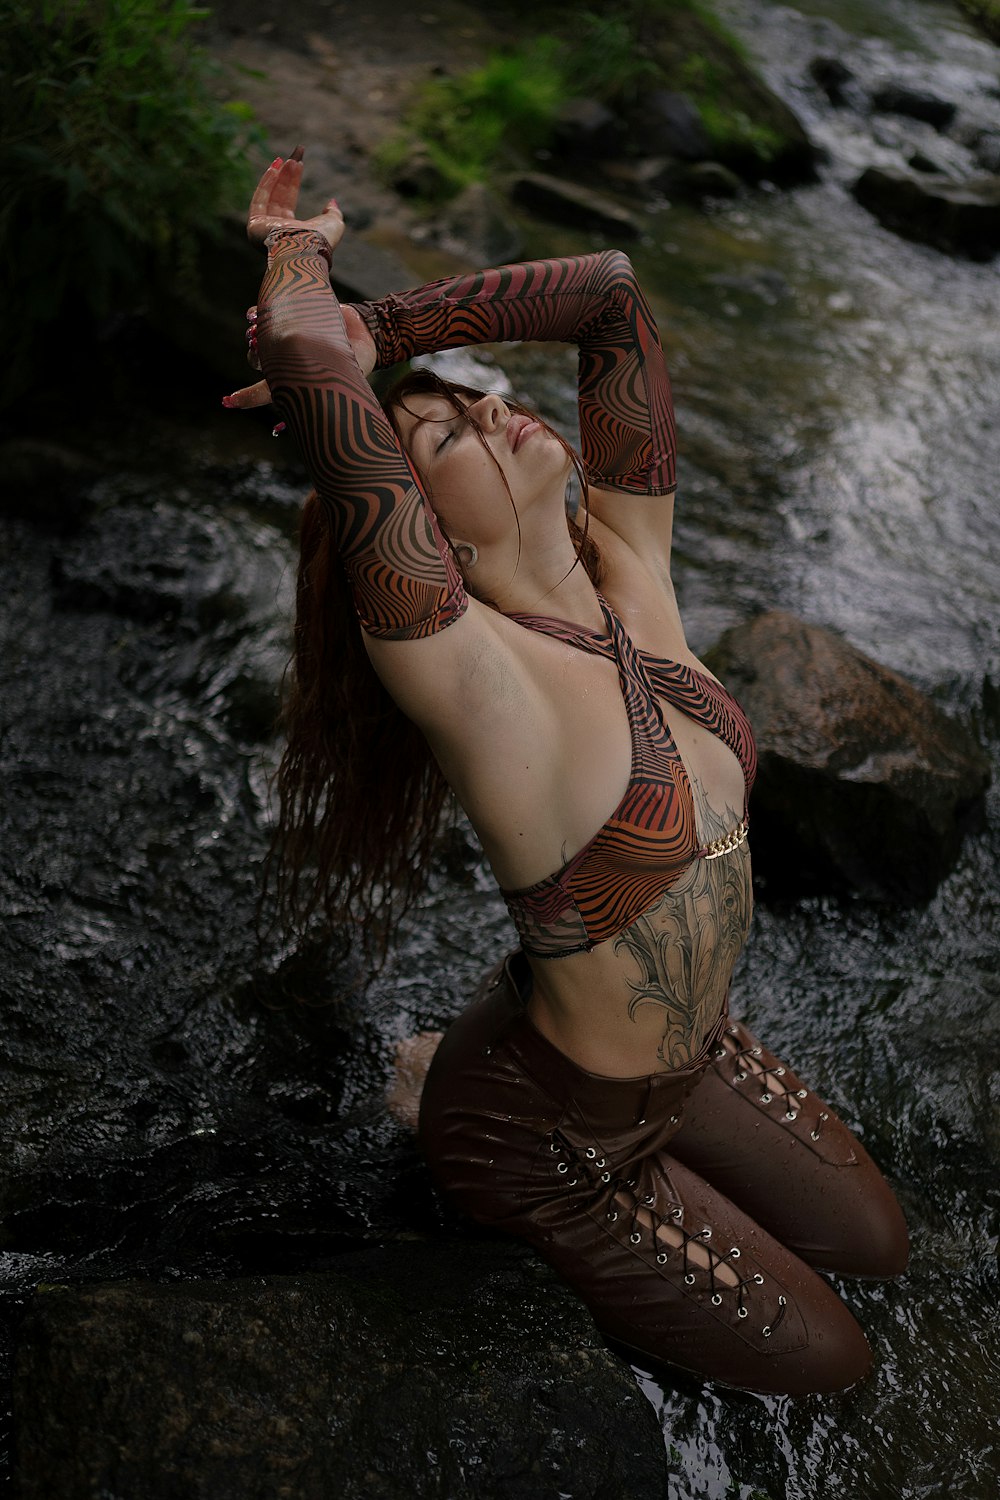 a beautiful woman in a bikini sitting on a rock next to a river